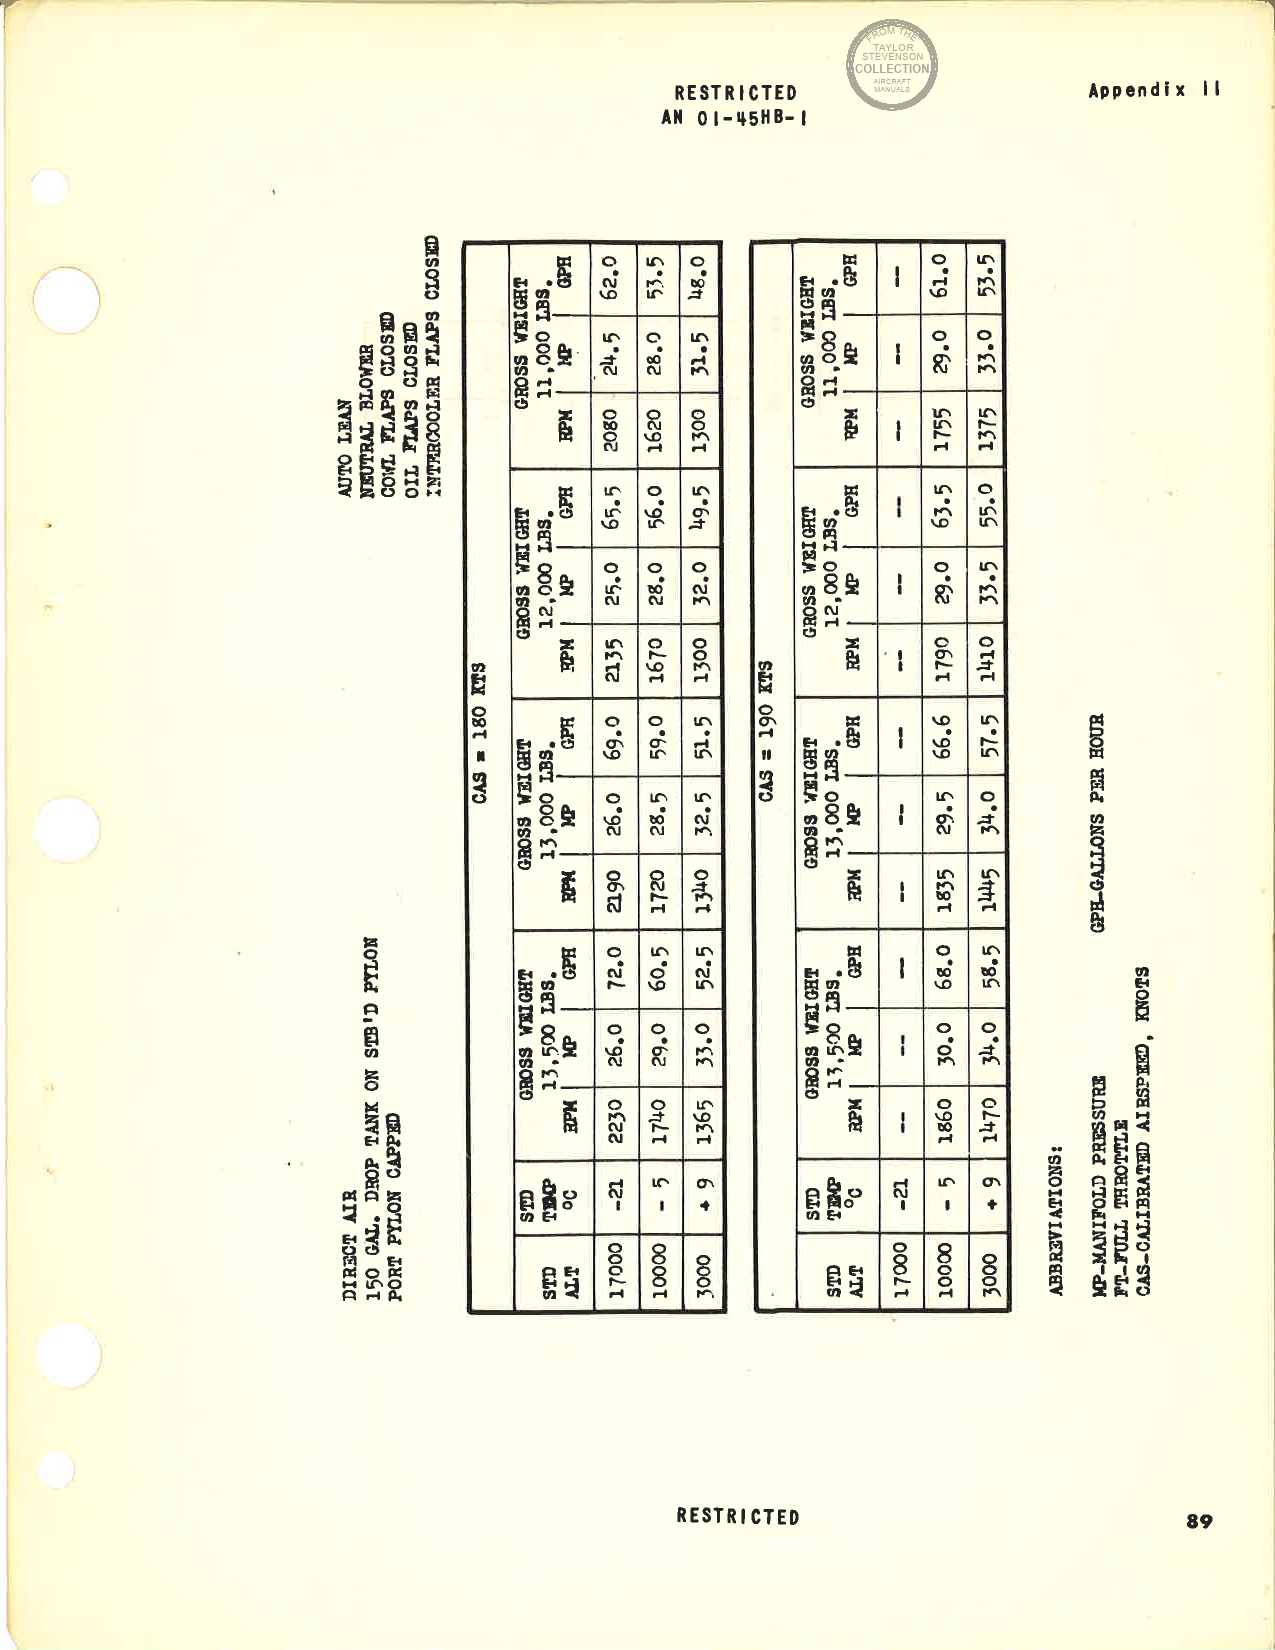 Sample page 100 from AirCorps Library document: Pilot's Handbook - Corsair - F4U-4 F4U-4B